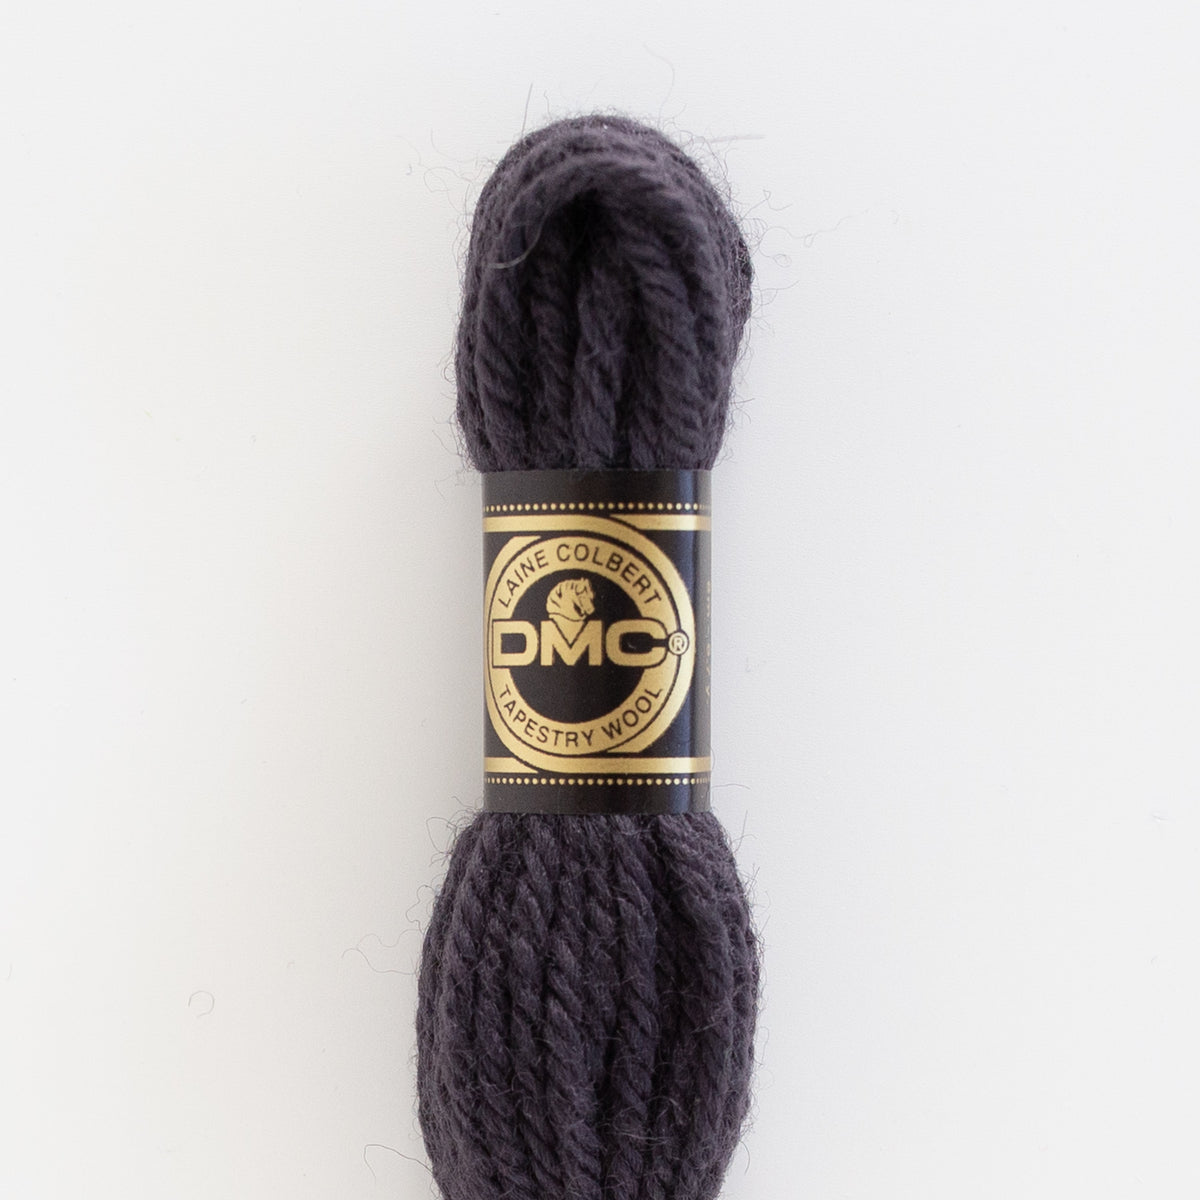 DMC Laine Colbert Tapestry wool 7624